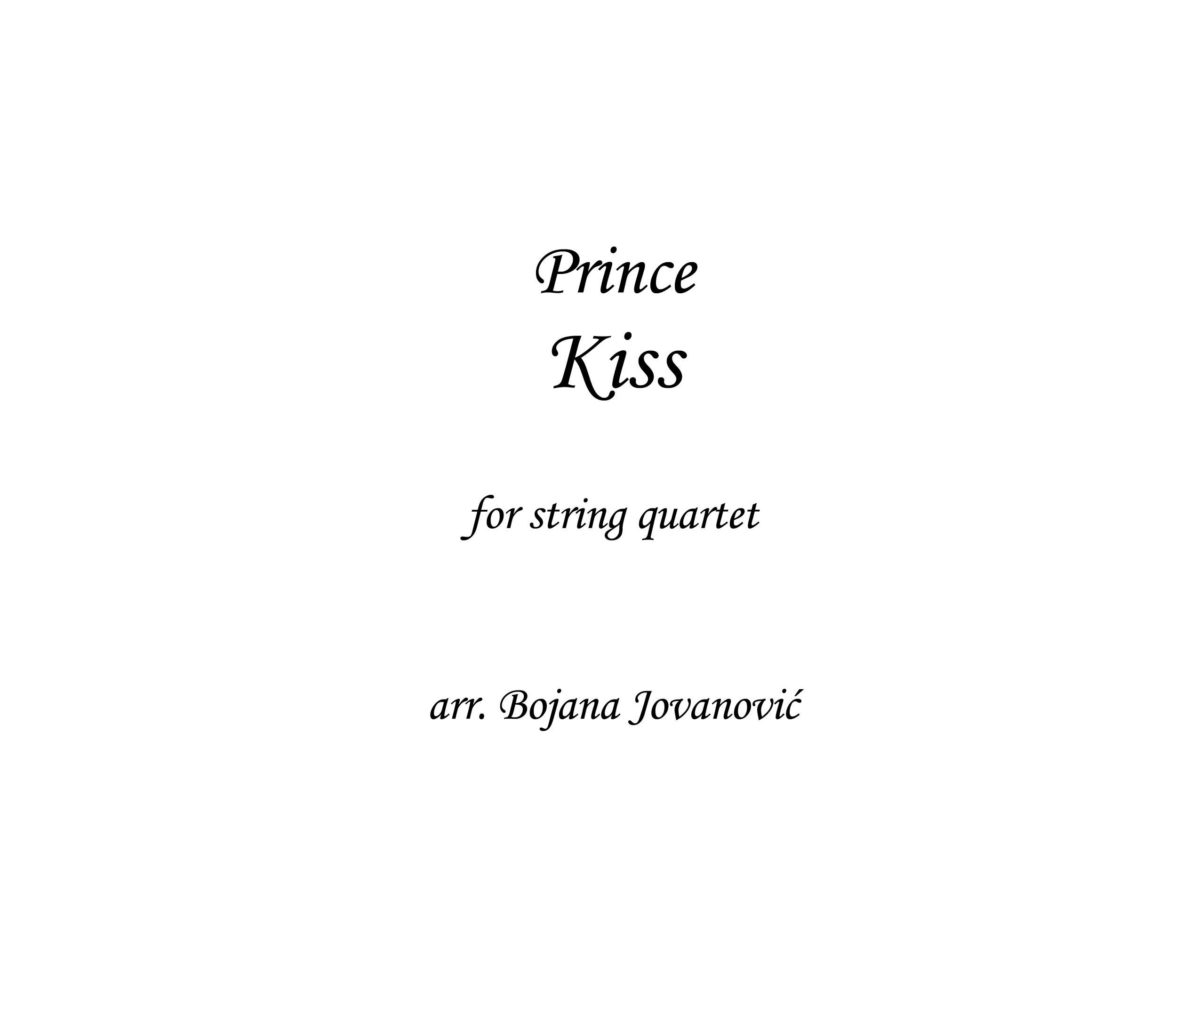 Kiss (Prince) - Music Sheet